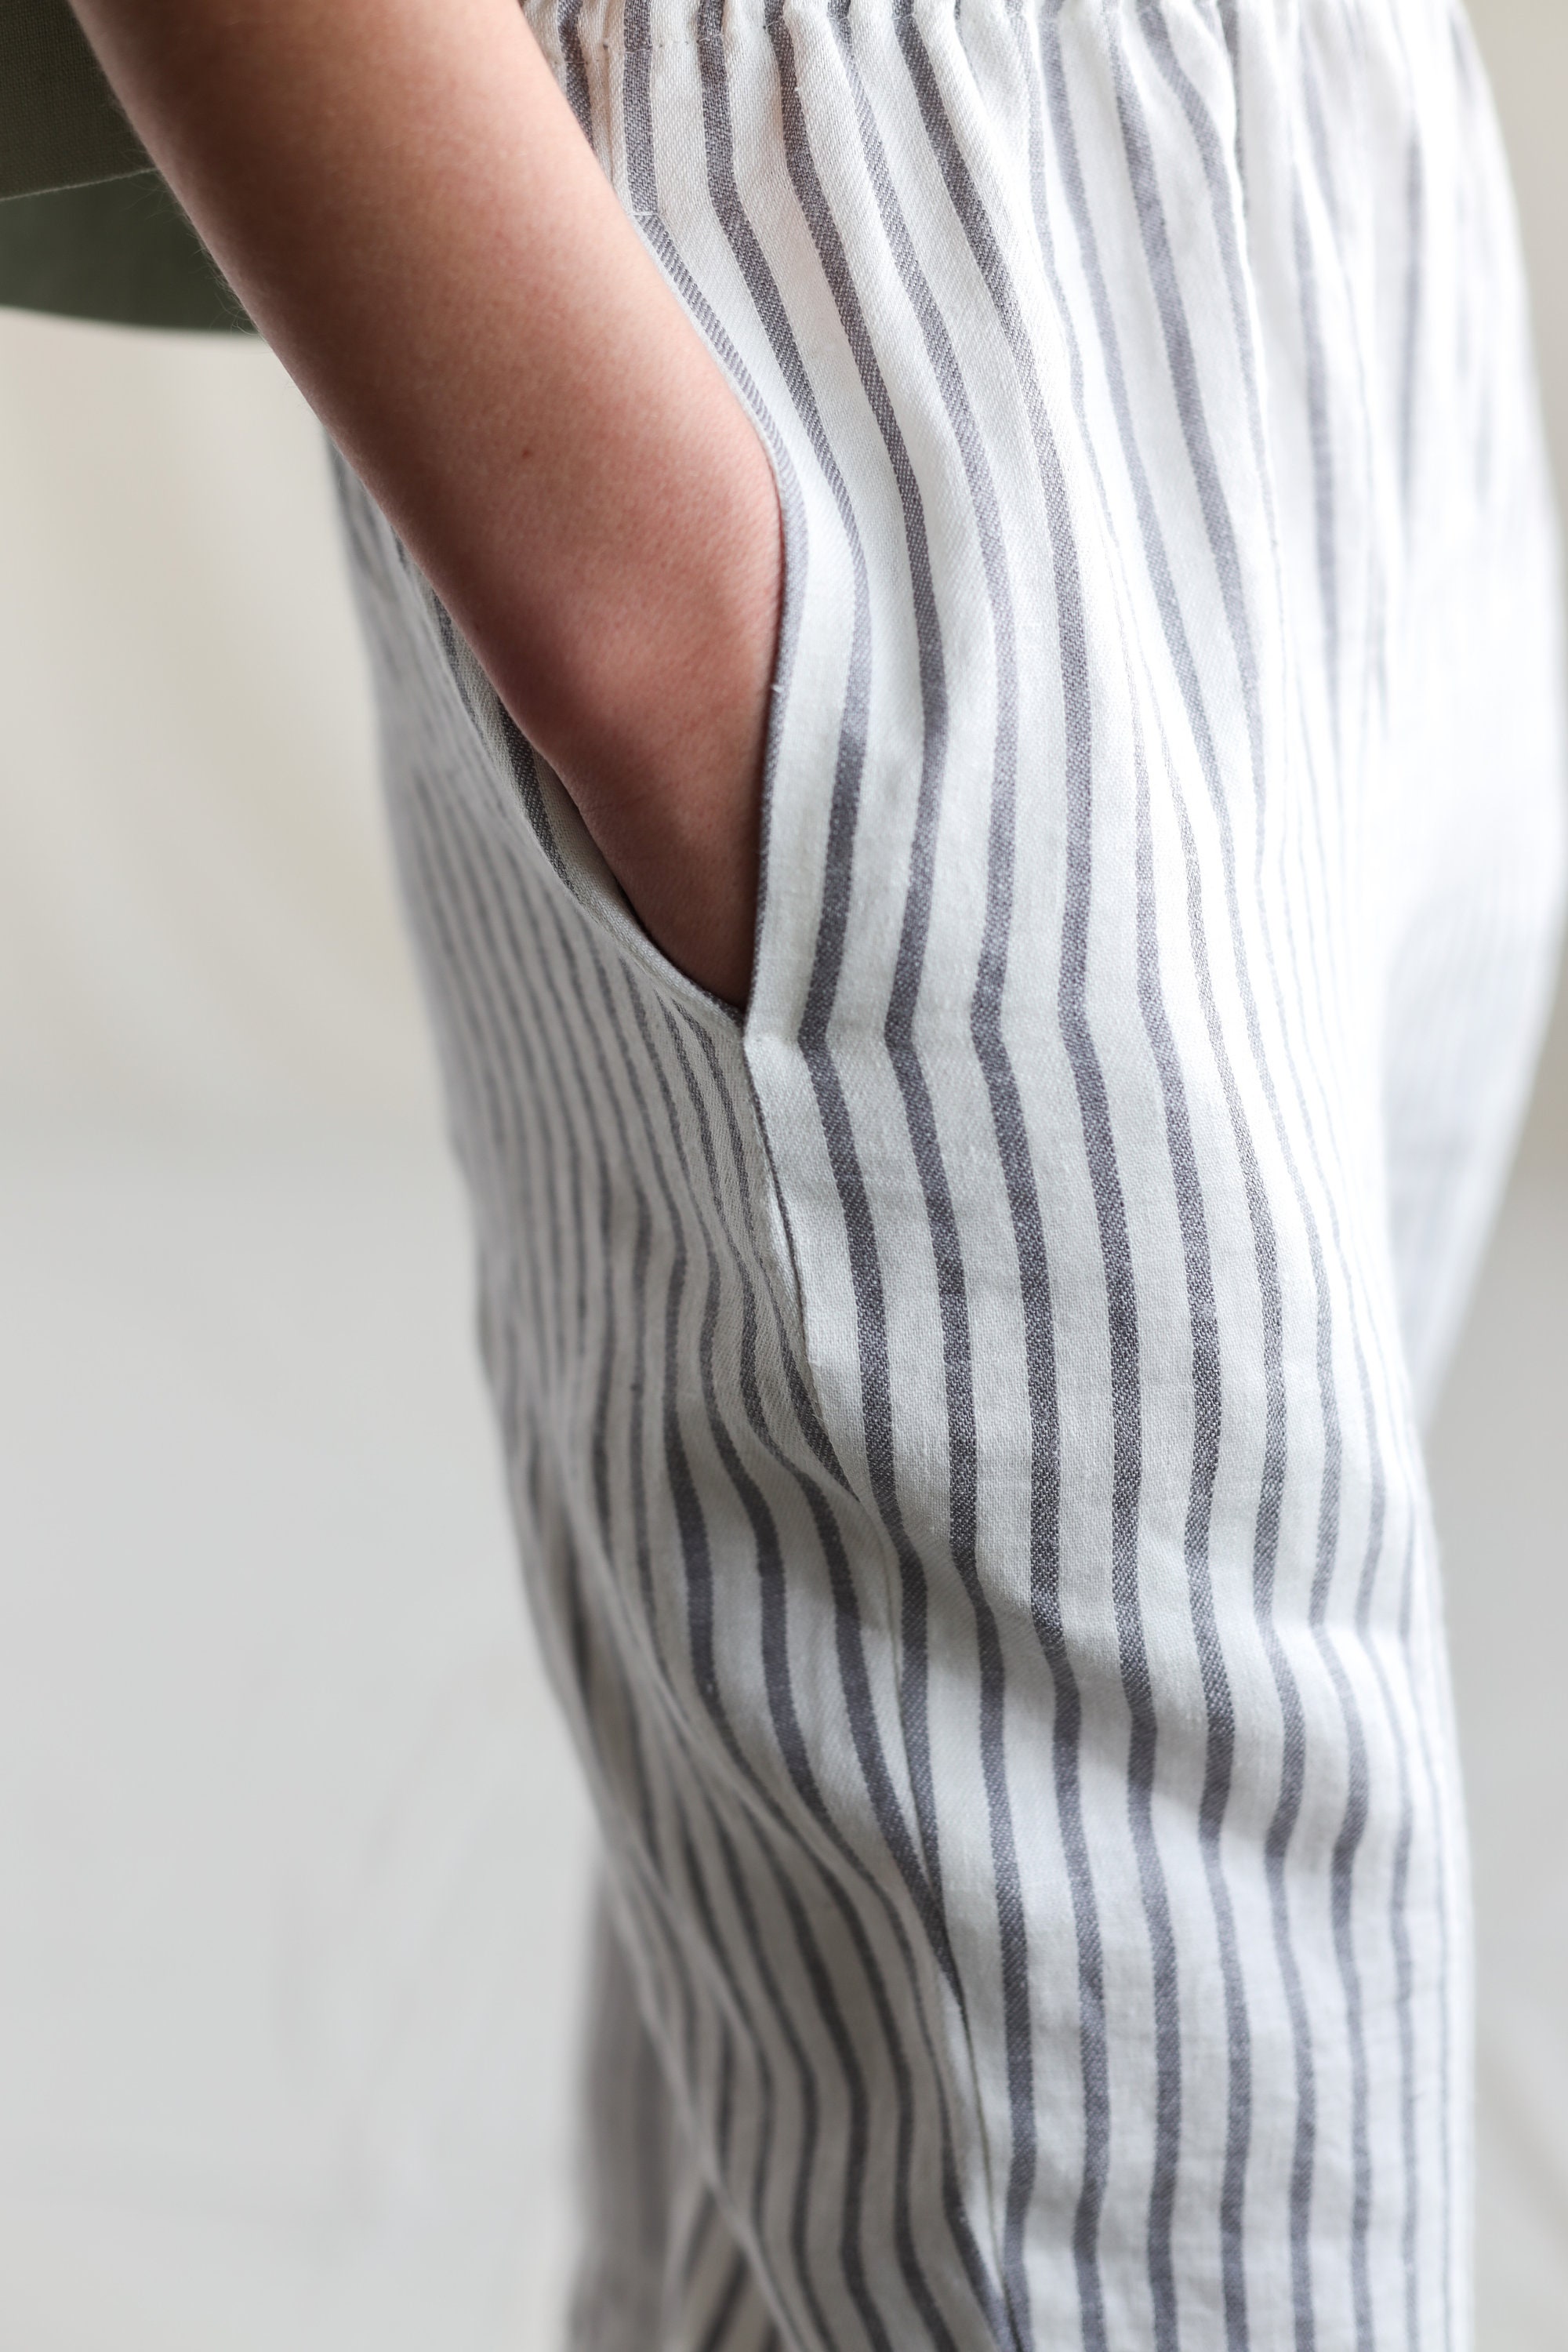 Cropped Linen Pants in Stripes / Linen Trousers / Classic Women Linen Pants  / OFFON CLOTHING -  Canada